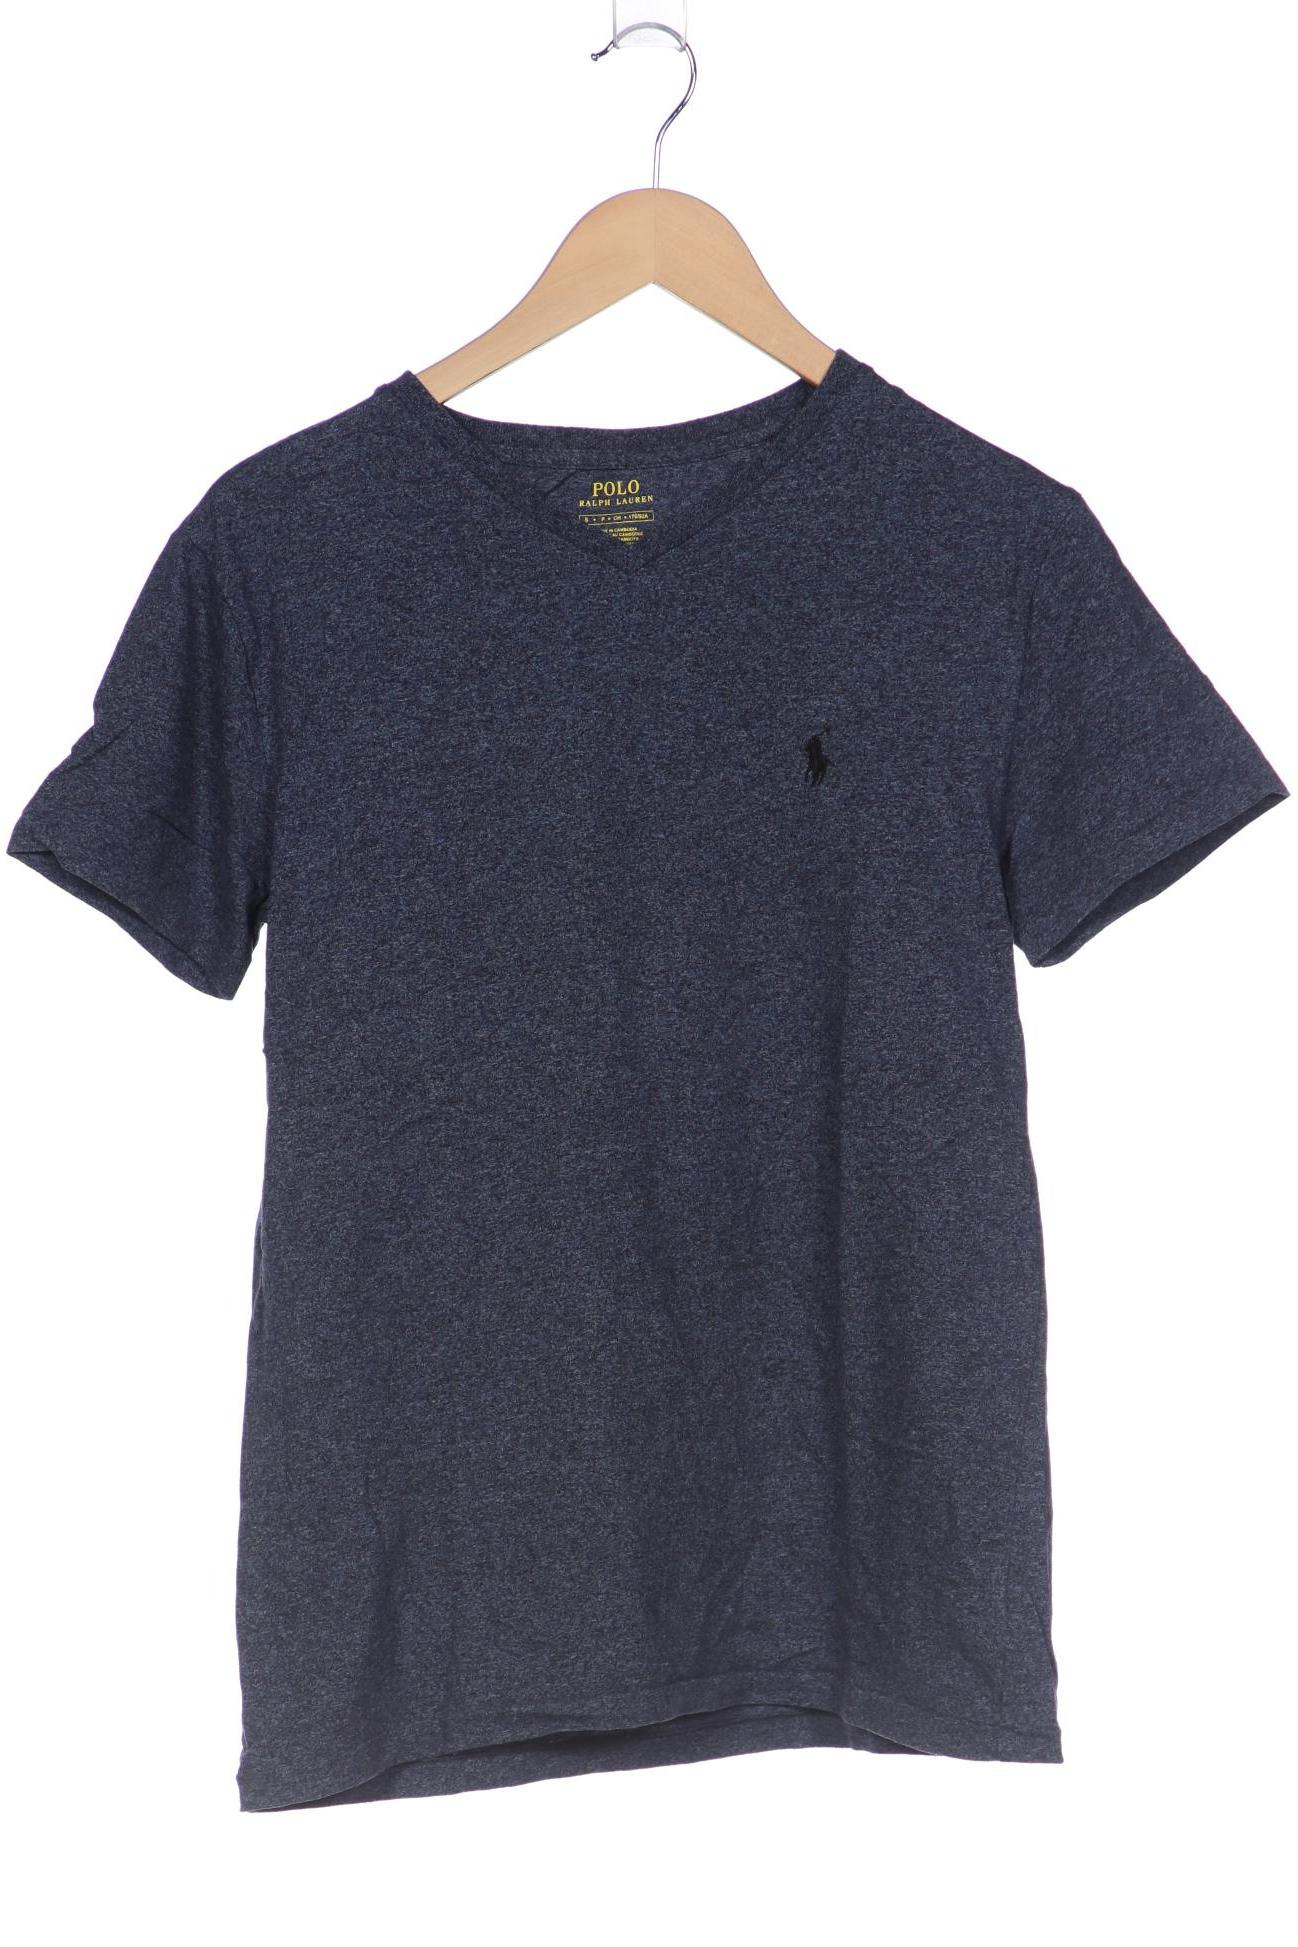 Polo Ralph Lauren Herren T-Shirt, marineblau von Polo Ralph Lauren